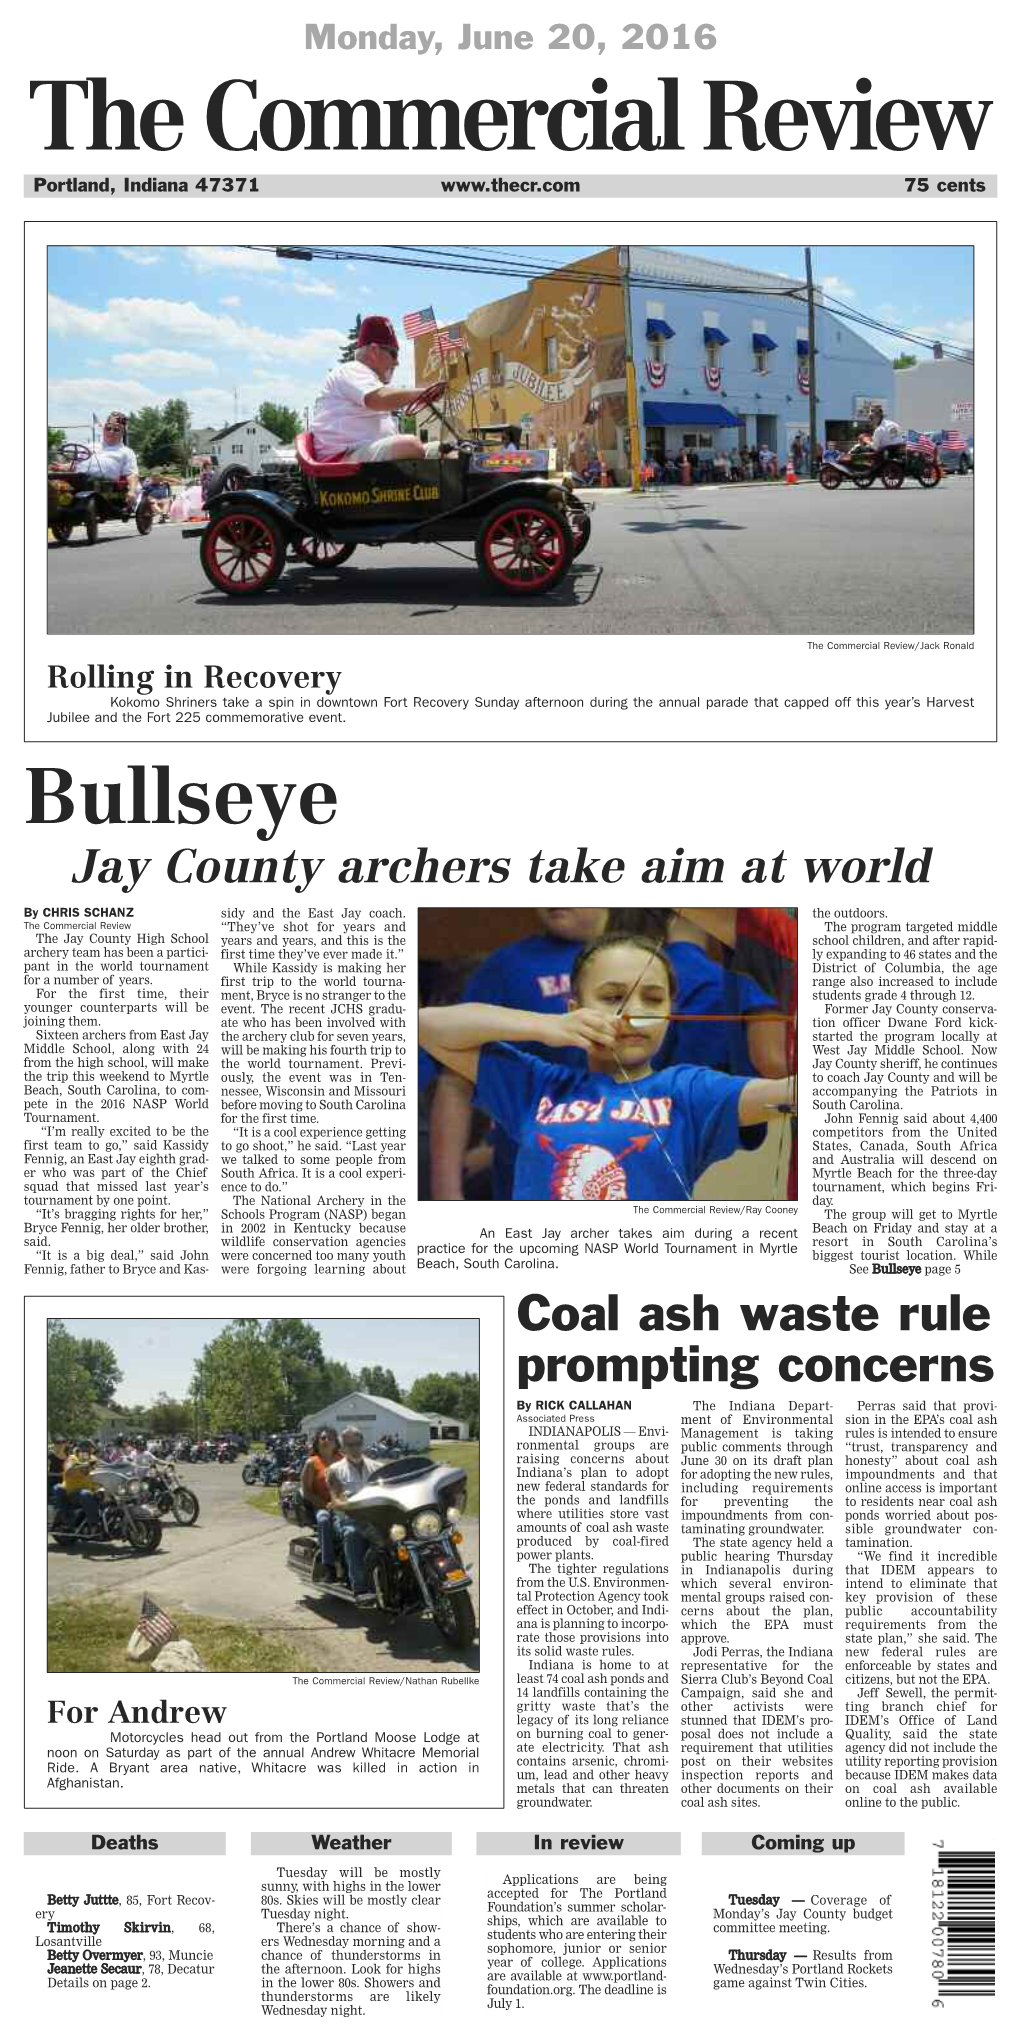 Bullseye Jay County Archers Take Aim at World